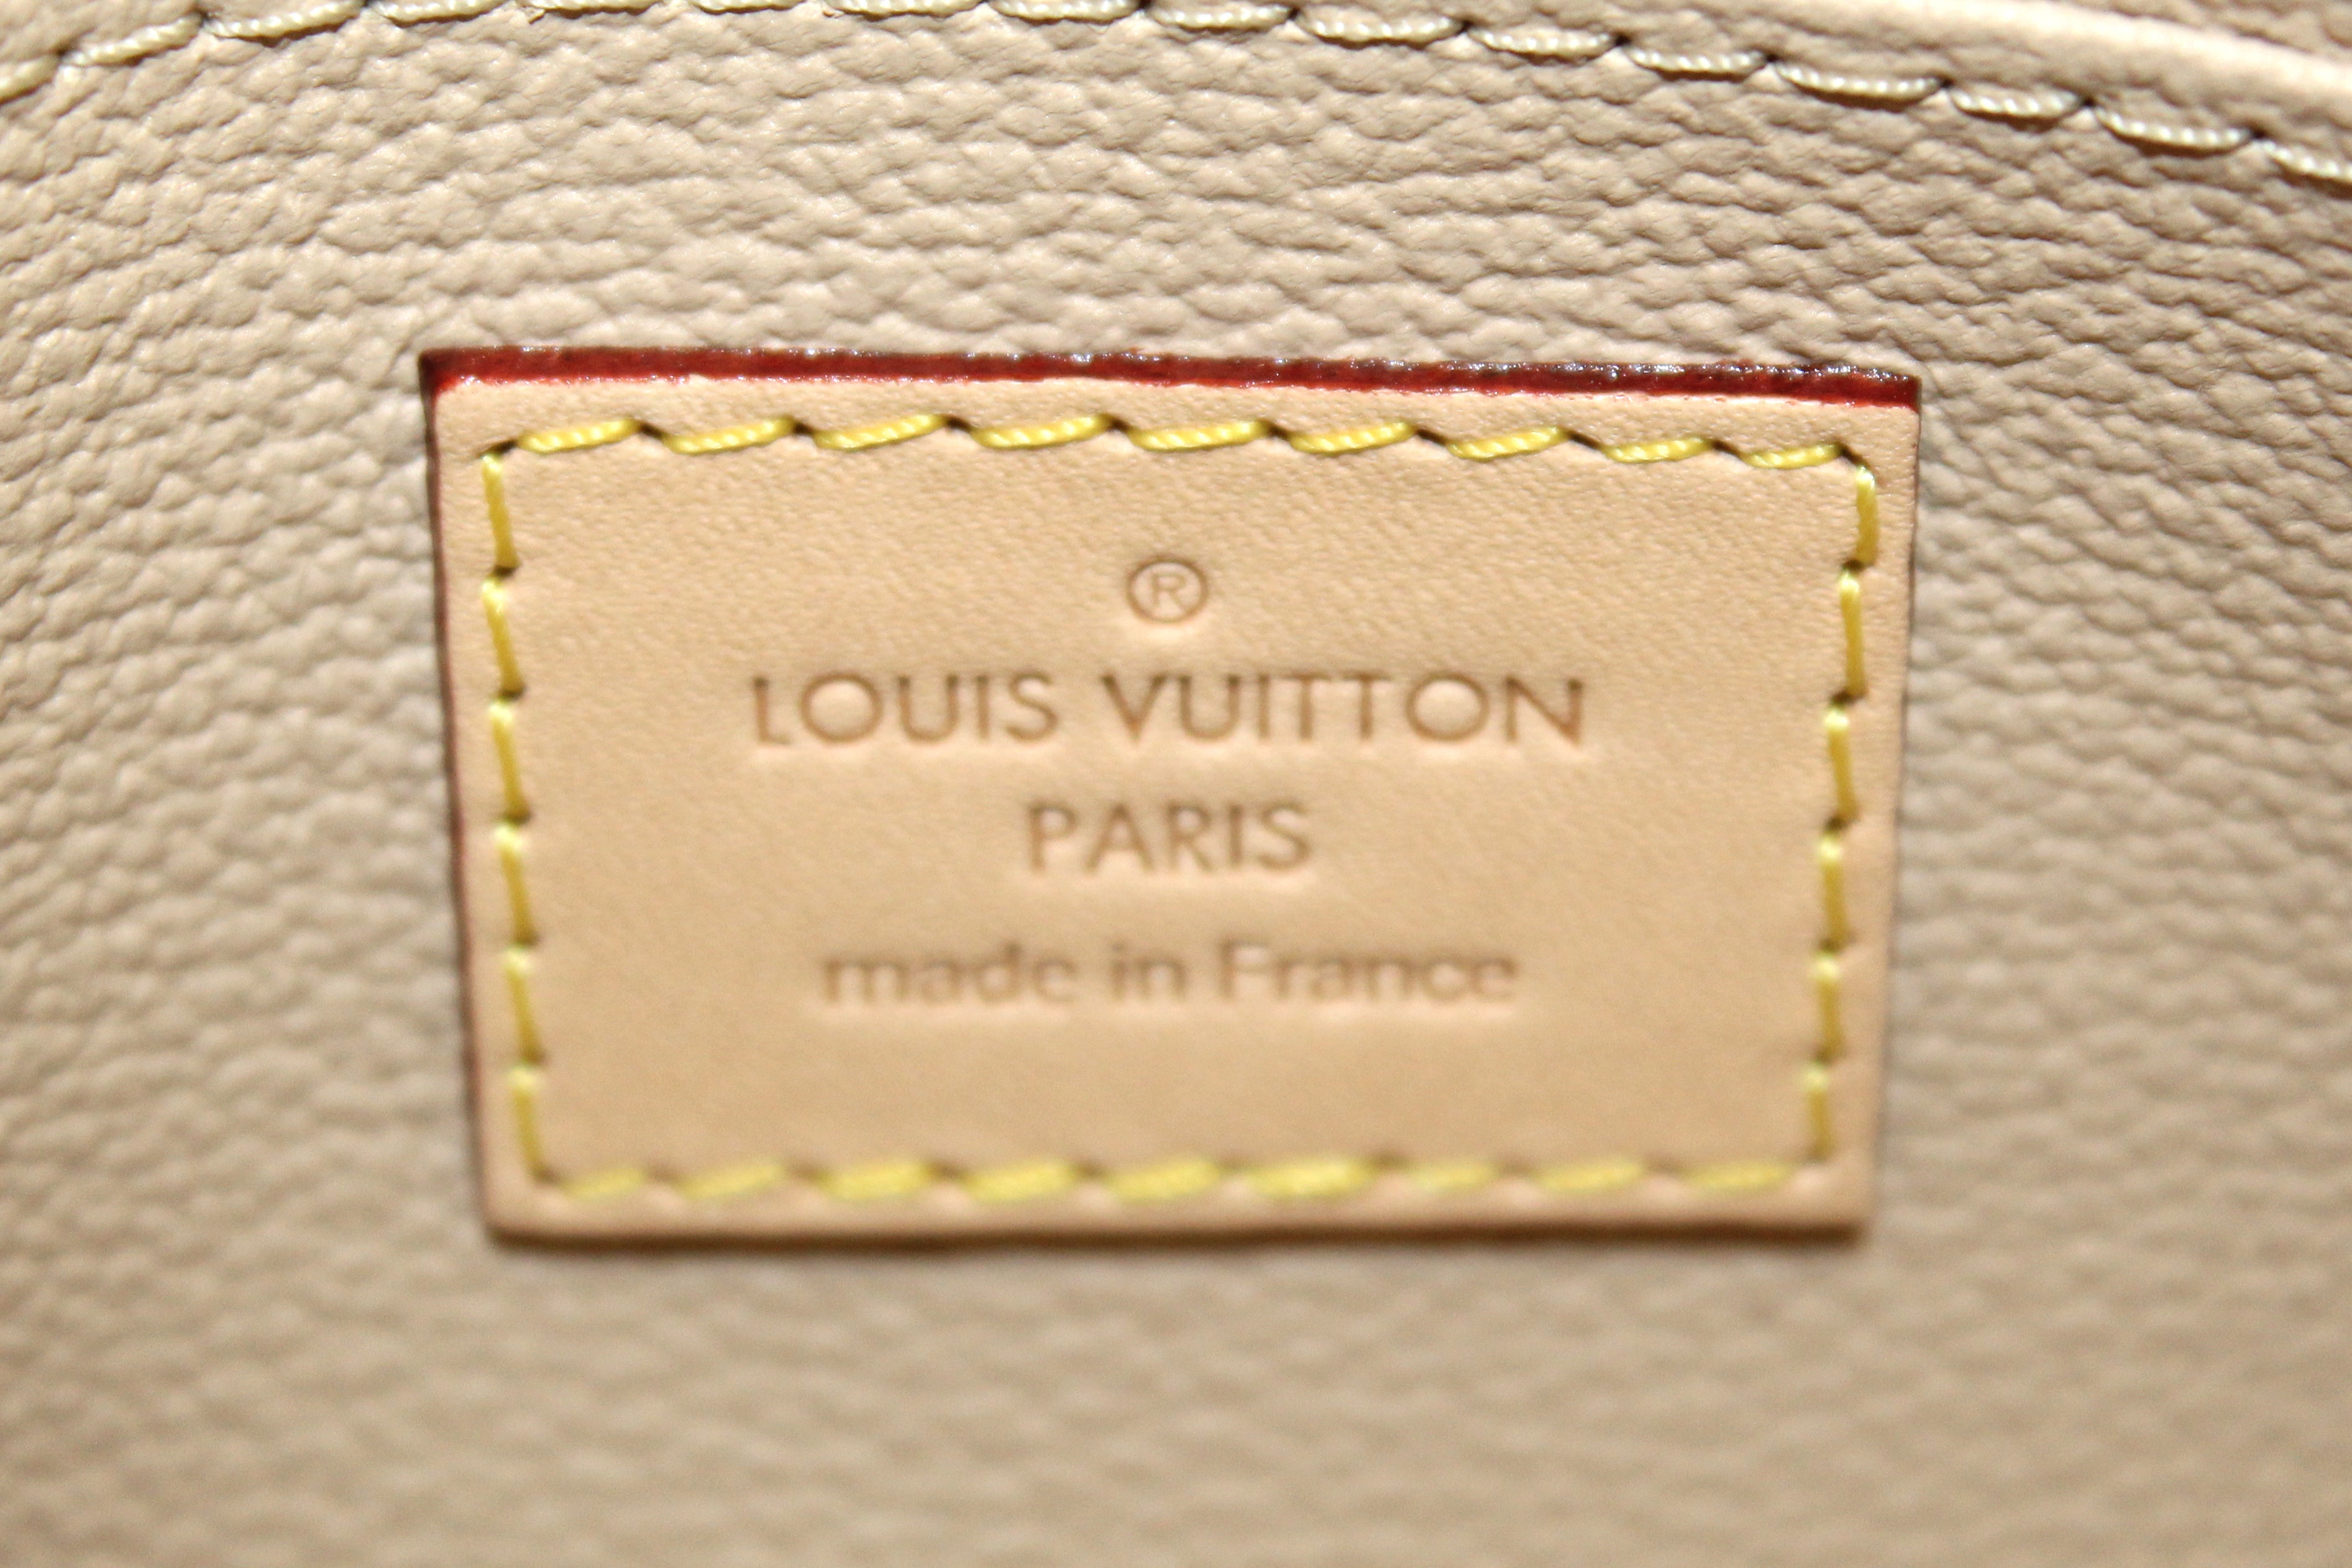 Authentic NEW Louis Vuitton Classic Monogram Canvas Cosmetic Pouch